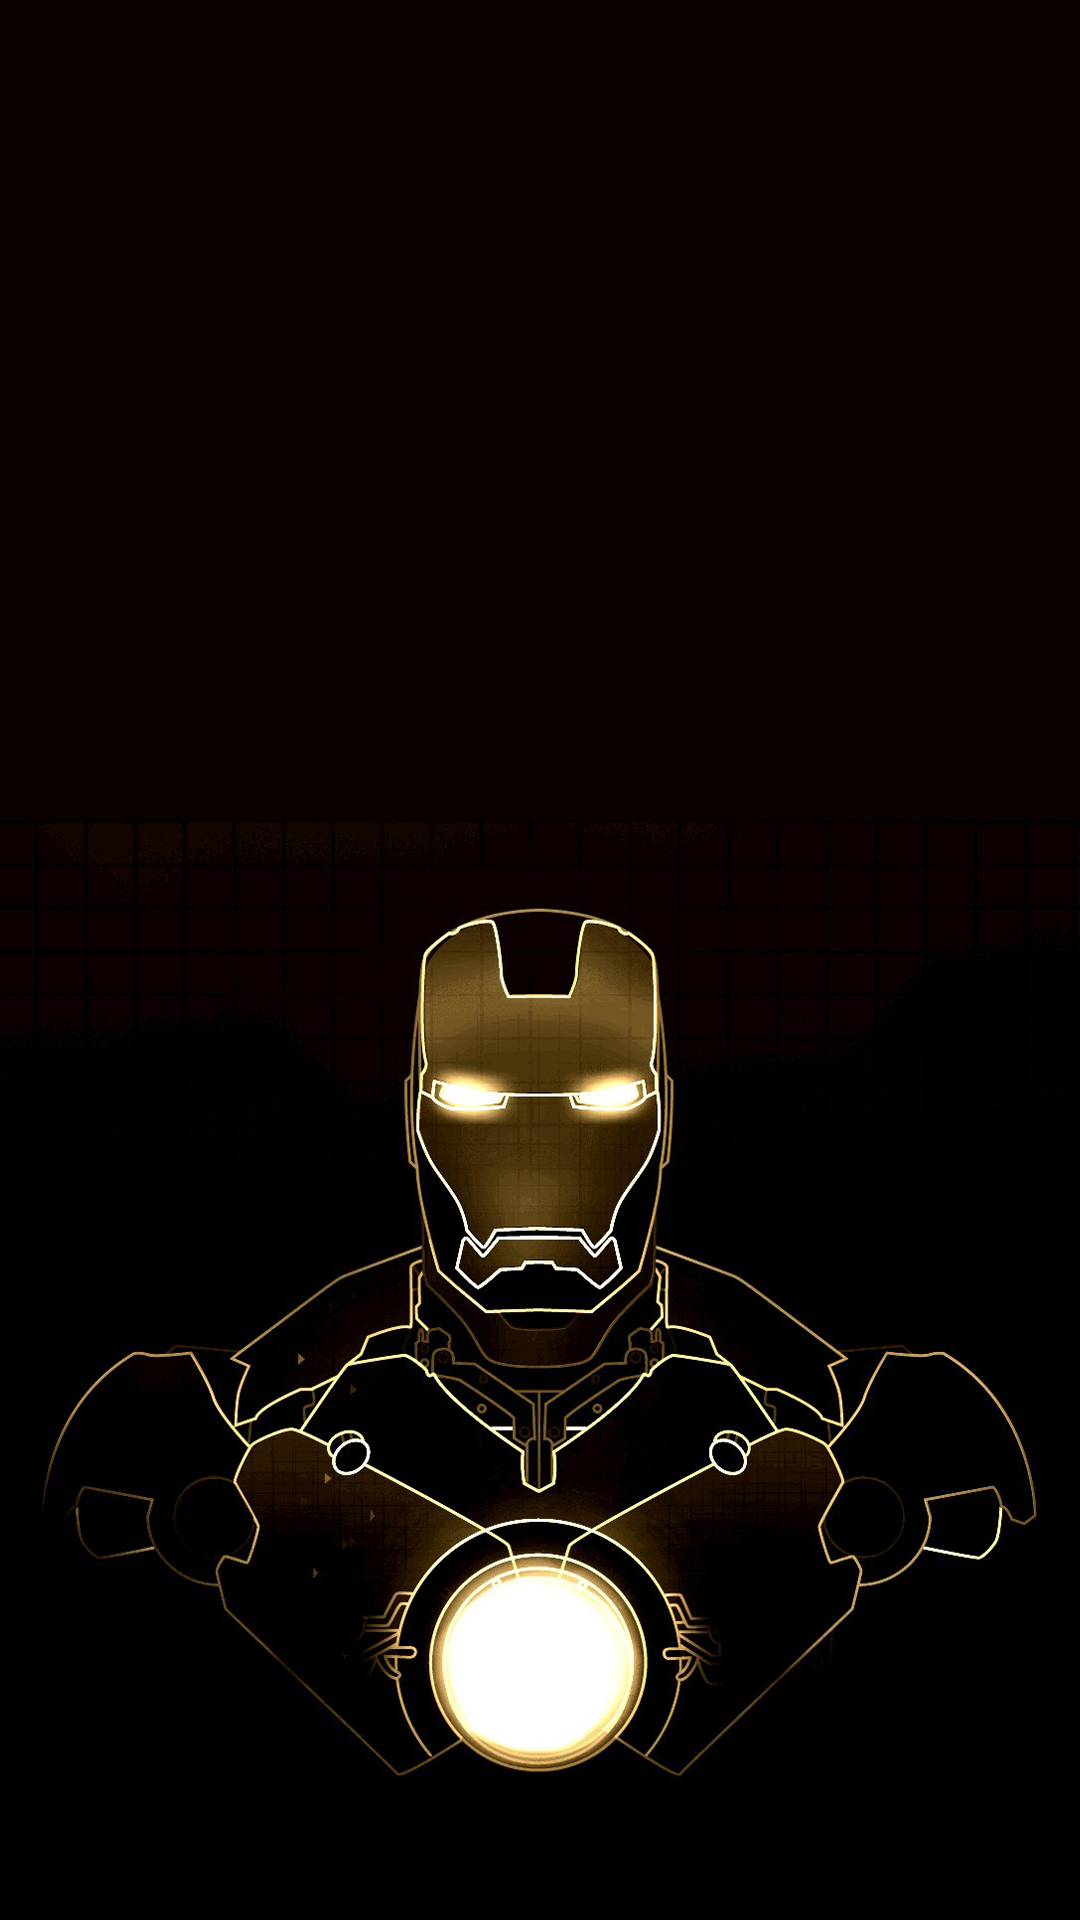 charging wallpaper,iron man,superhero,fictional character,batman,illustration